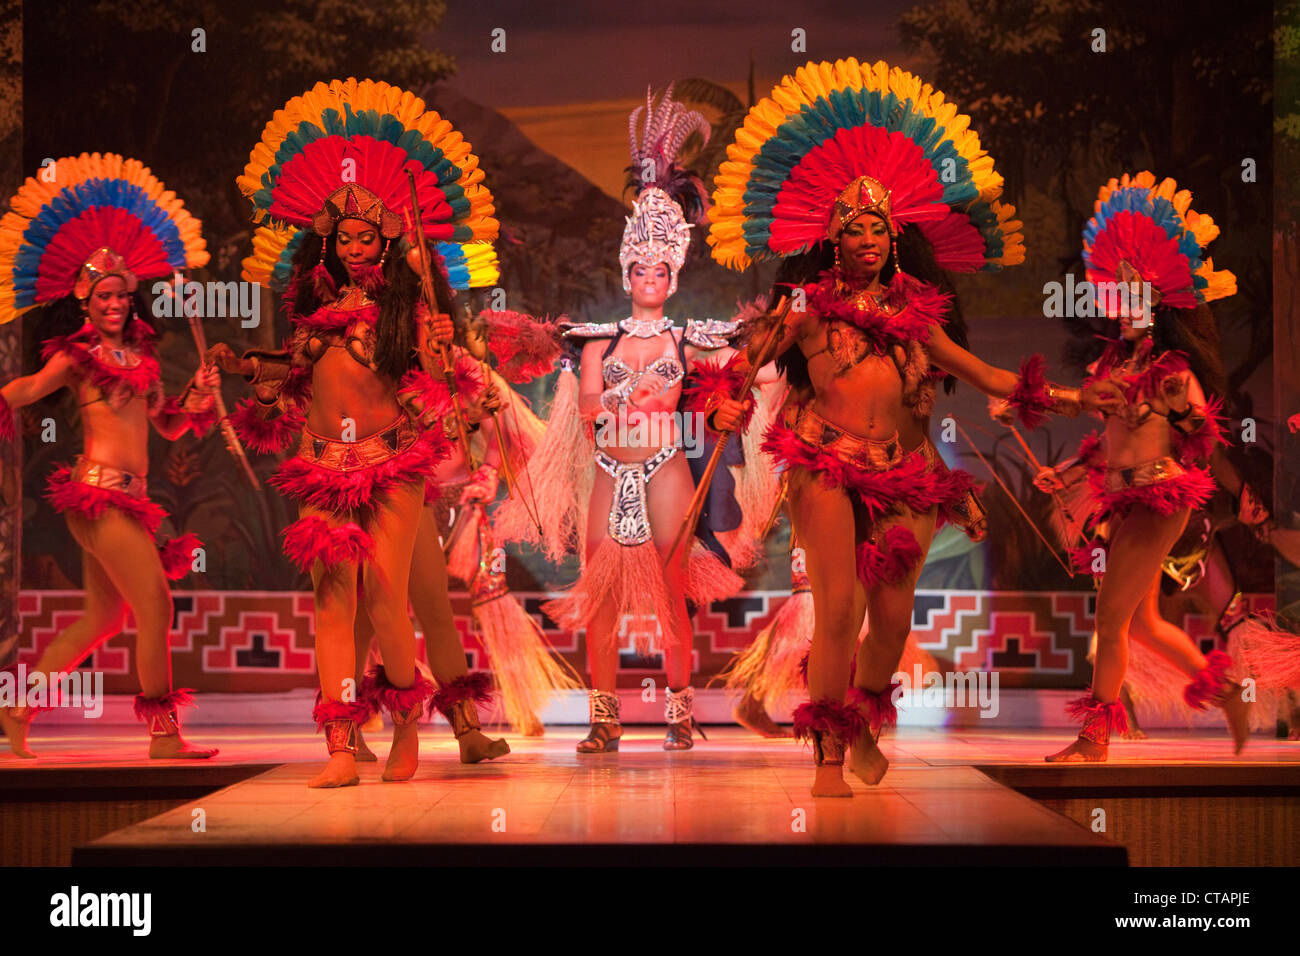 Bunten Kostümen an Folklore und Samba Tanzshow im Variete Plataforma 1, Rio De Janeiro, Rio De Janeiro, Brasilien, Süd amerik. Stockfoto